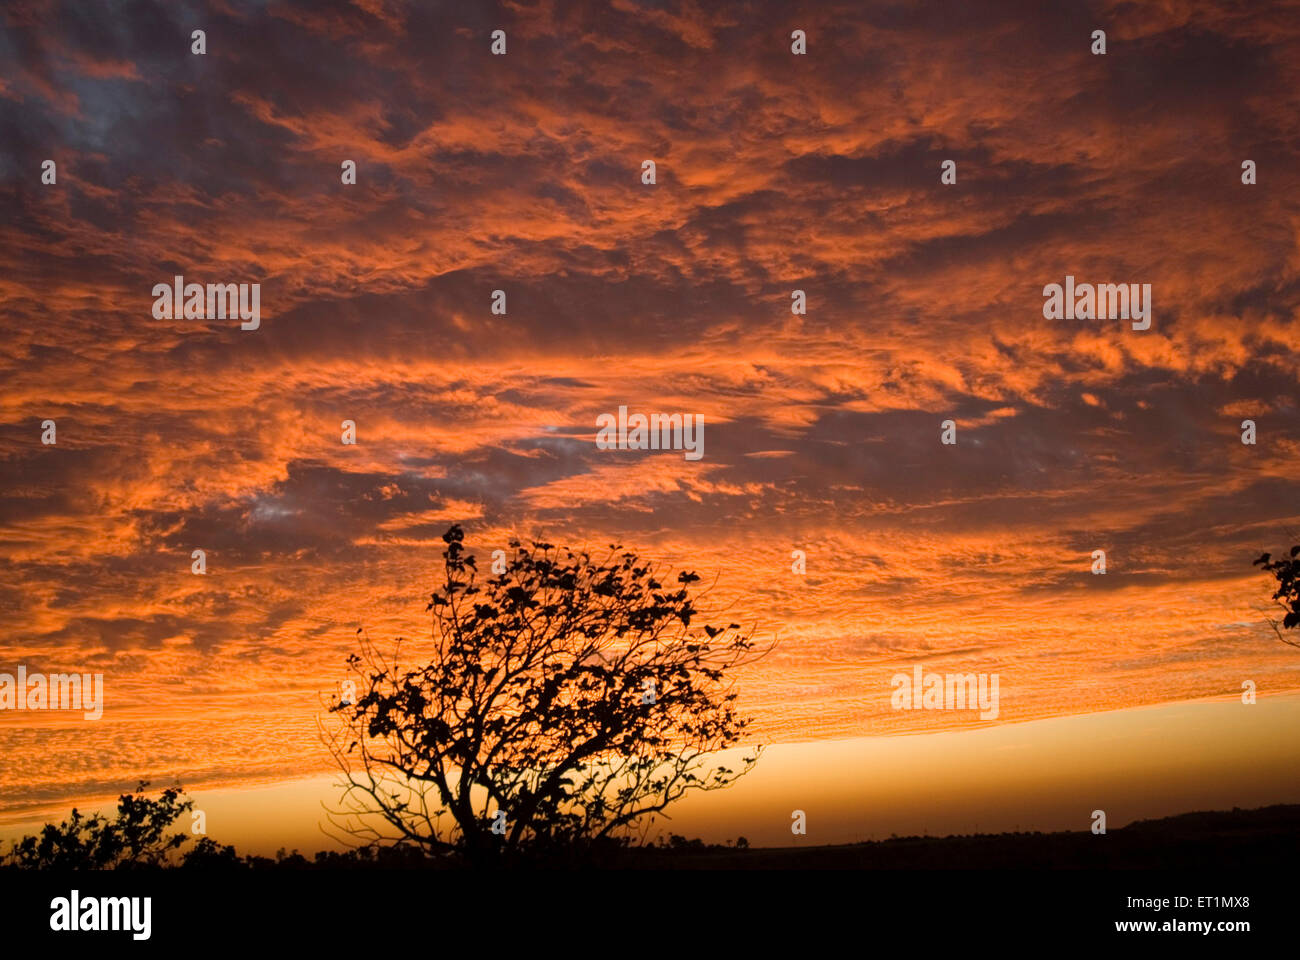 tree silhouette orange sky yellow clouds sunrise dawn morning Stock Photo